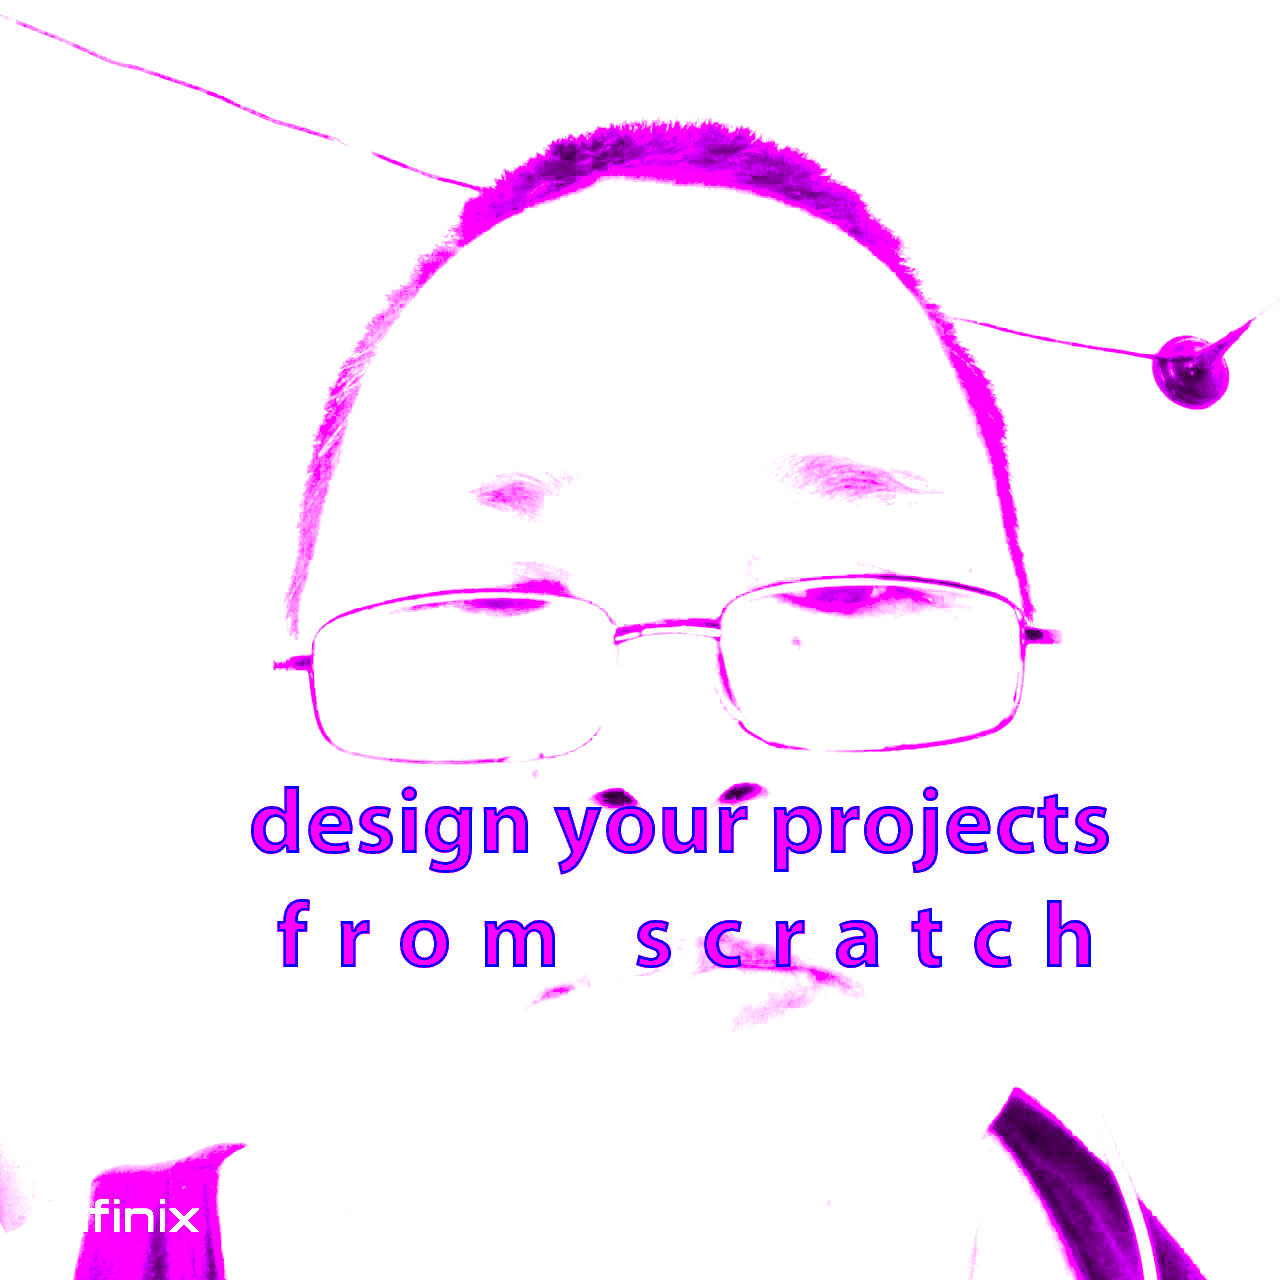 ~
~——
~__
=
Fr
7
ES

/ 1
\_ CL

A
design yduf projects
from scratch

NN